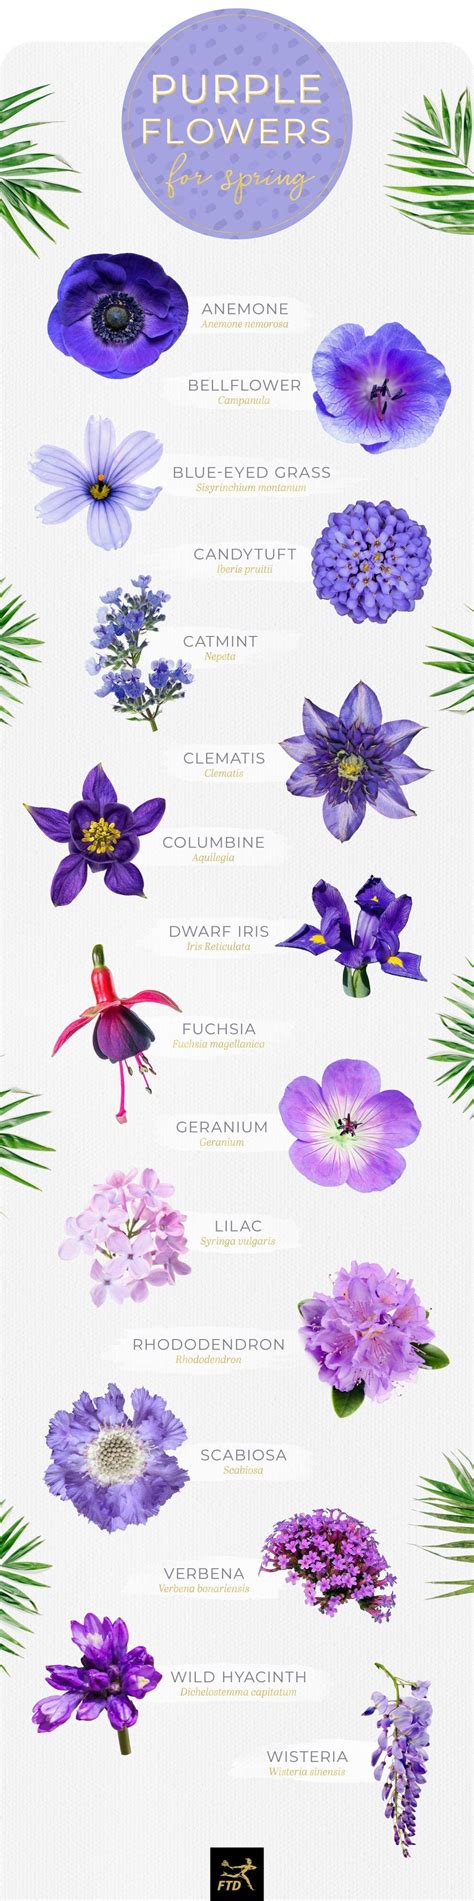 50 Types Of Purple Flowers Types Of Purple Flowers Purple